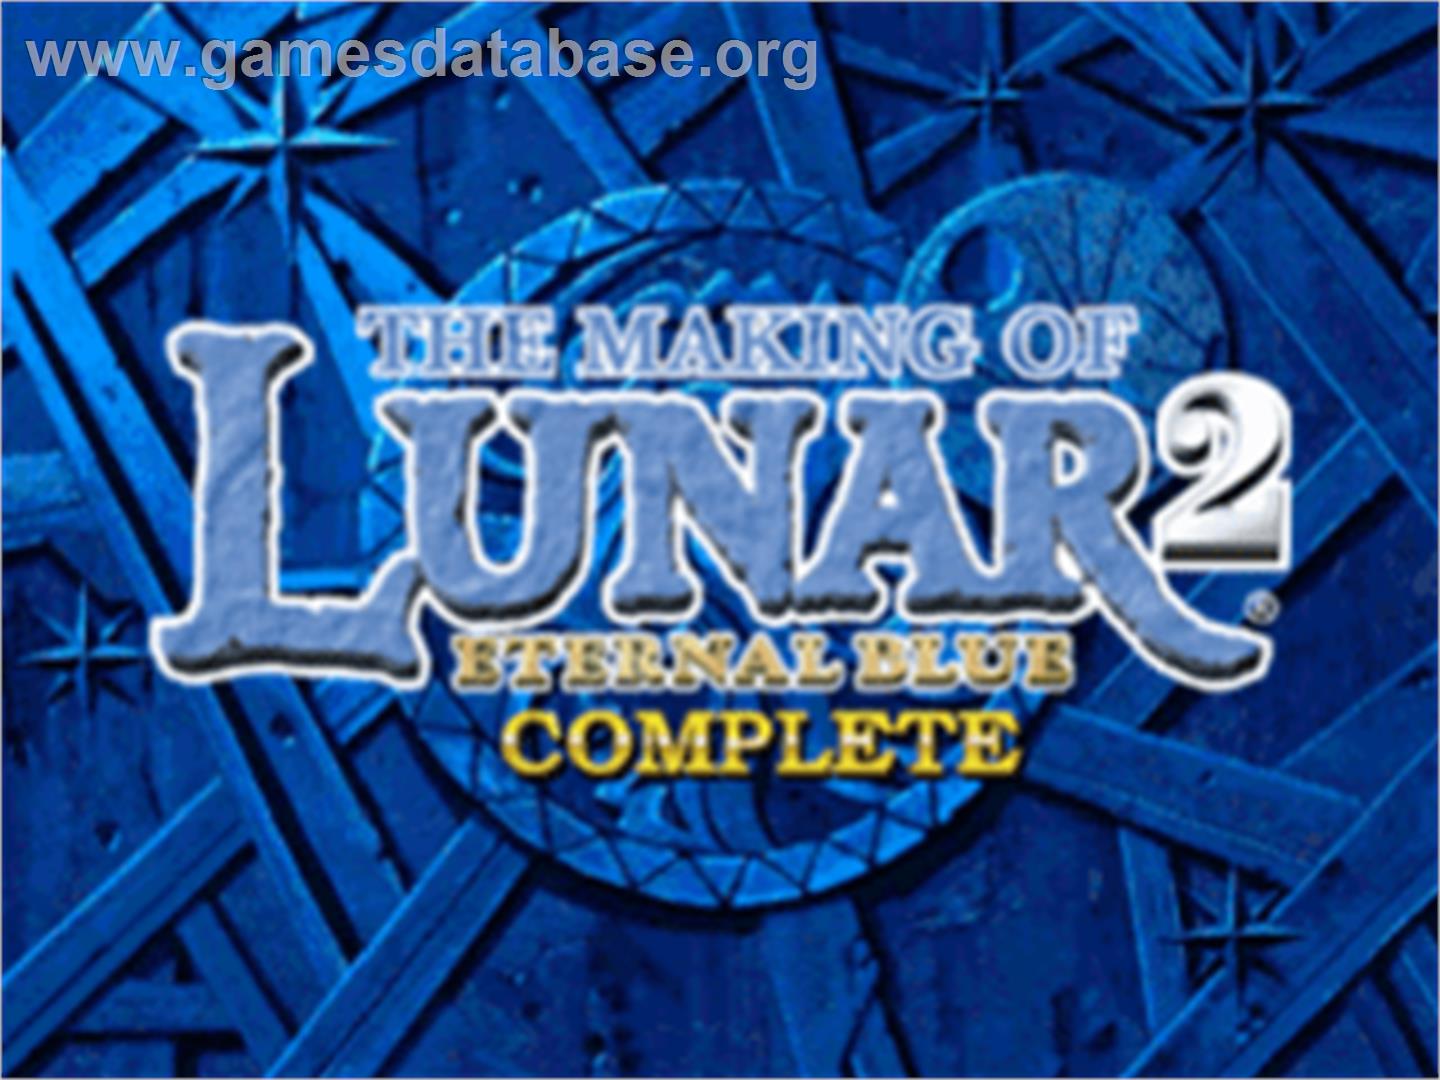 Lunar 2: Eternal Blue Complete - Sony Playstation - Artwork - Title Screen